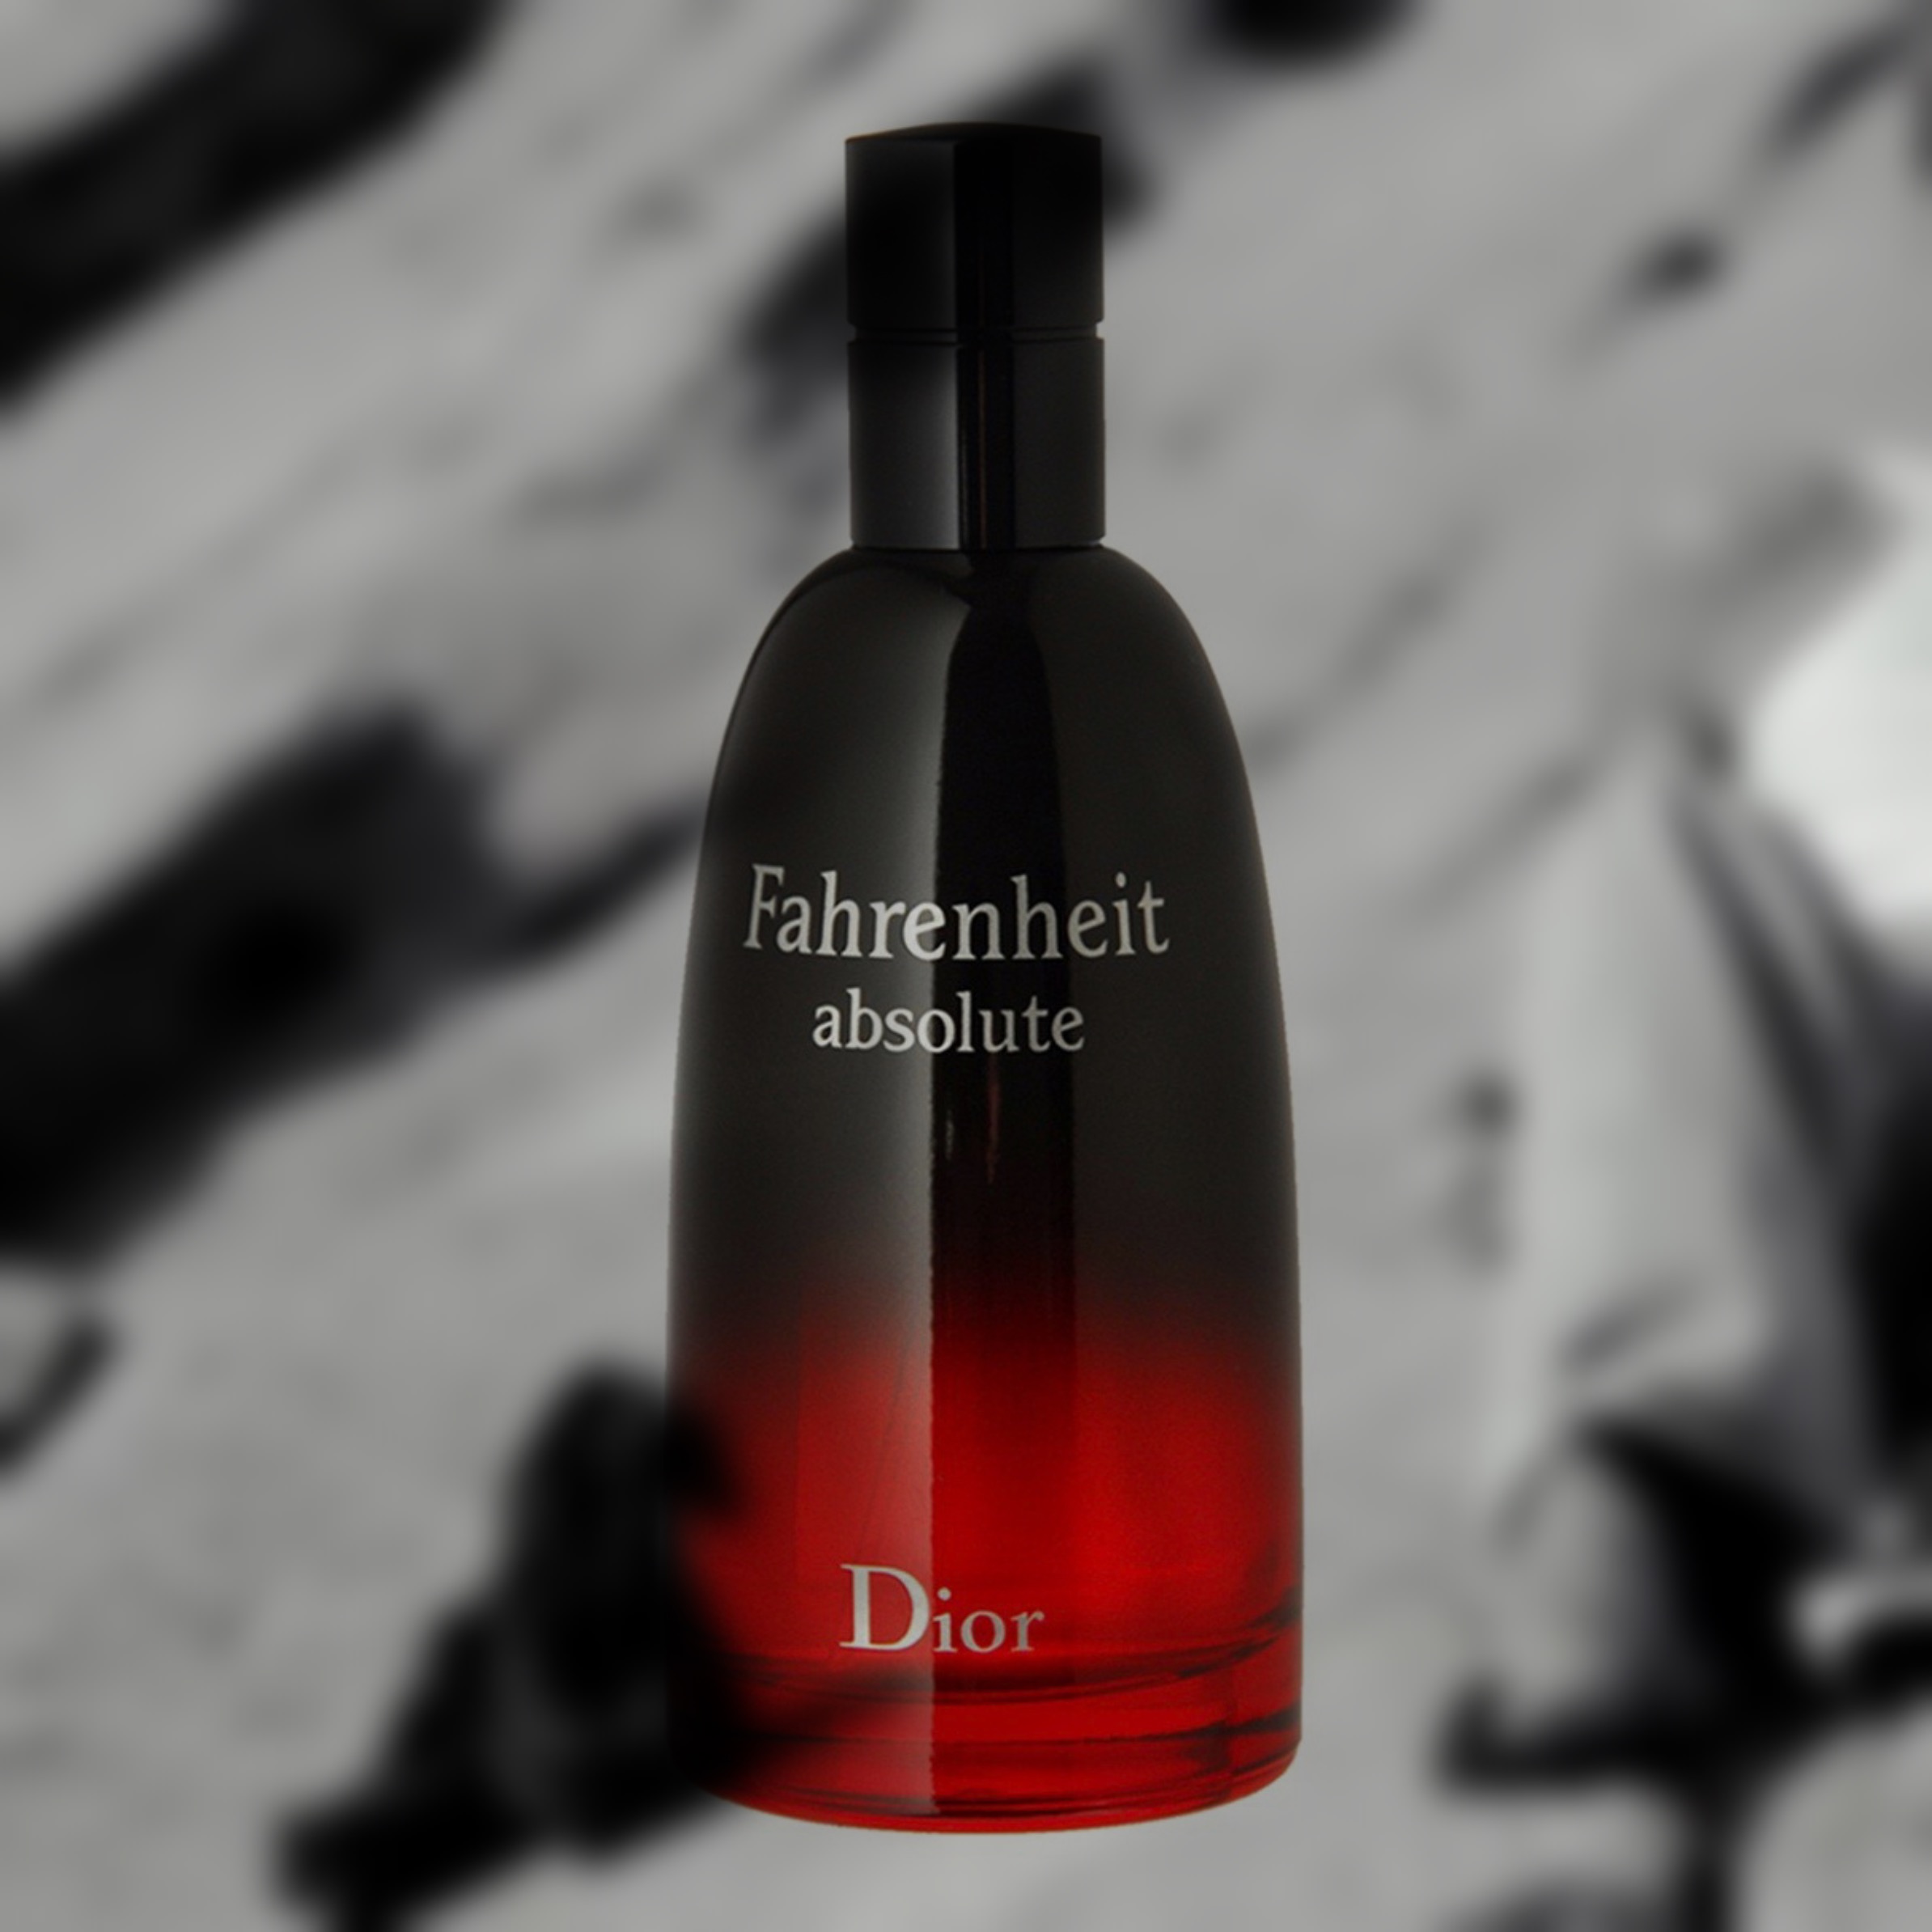 dior fahrenheit 32 discontinued